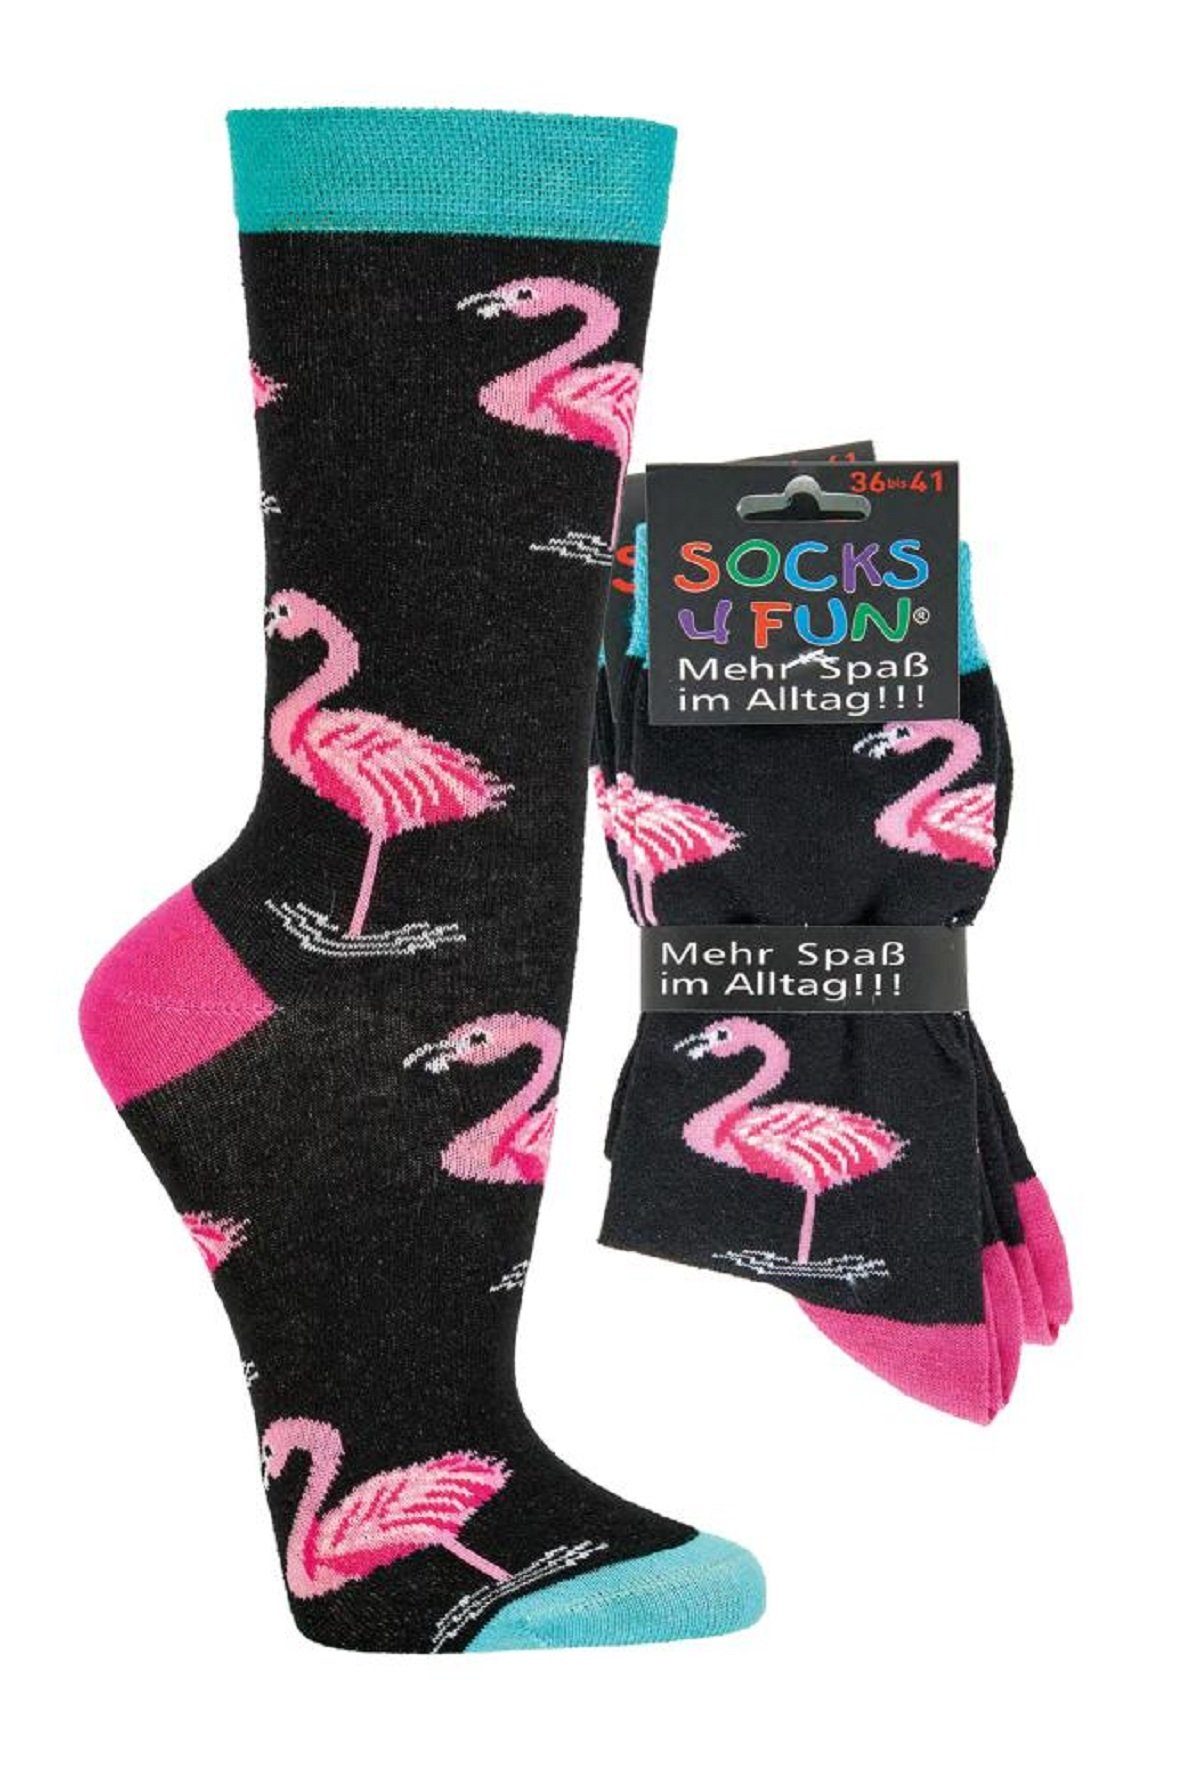 Socks 4 Fun Freizeitsocken Socks 4 Fun Motivsocken Flamingo 2er-Bündel (2 Paar, 2-Paar, 2 Paar)